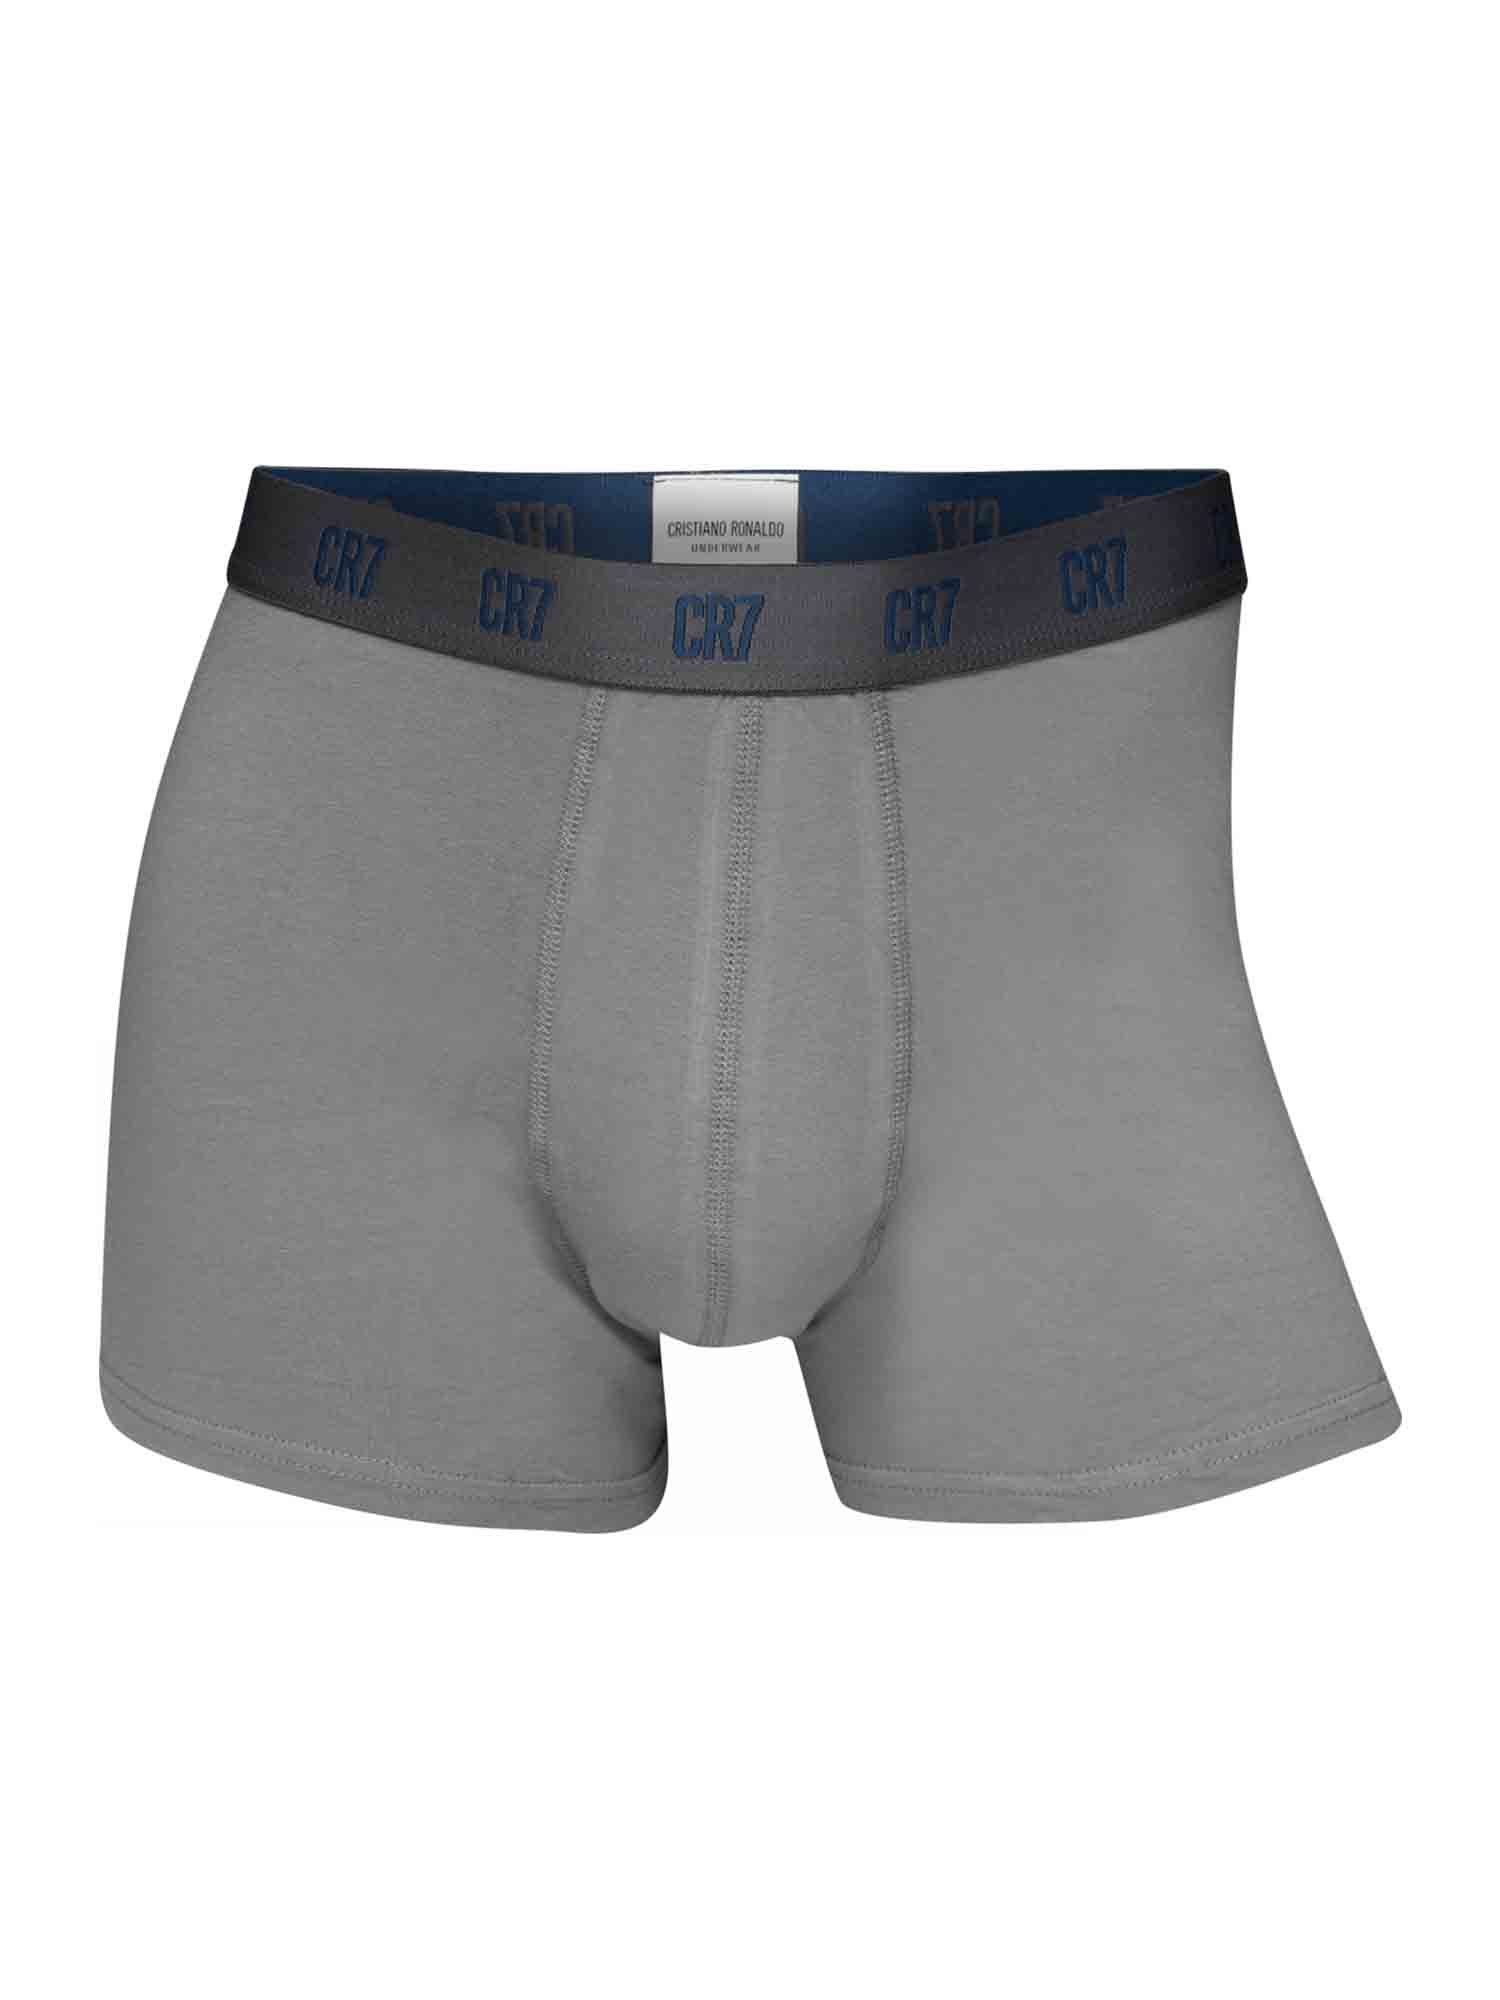 CR7 Retro Pants Retro Boxershorts Multipack Pants Multi Trunks (3-St) Männer 23 Herren